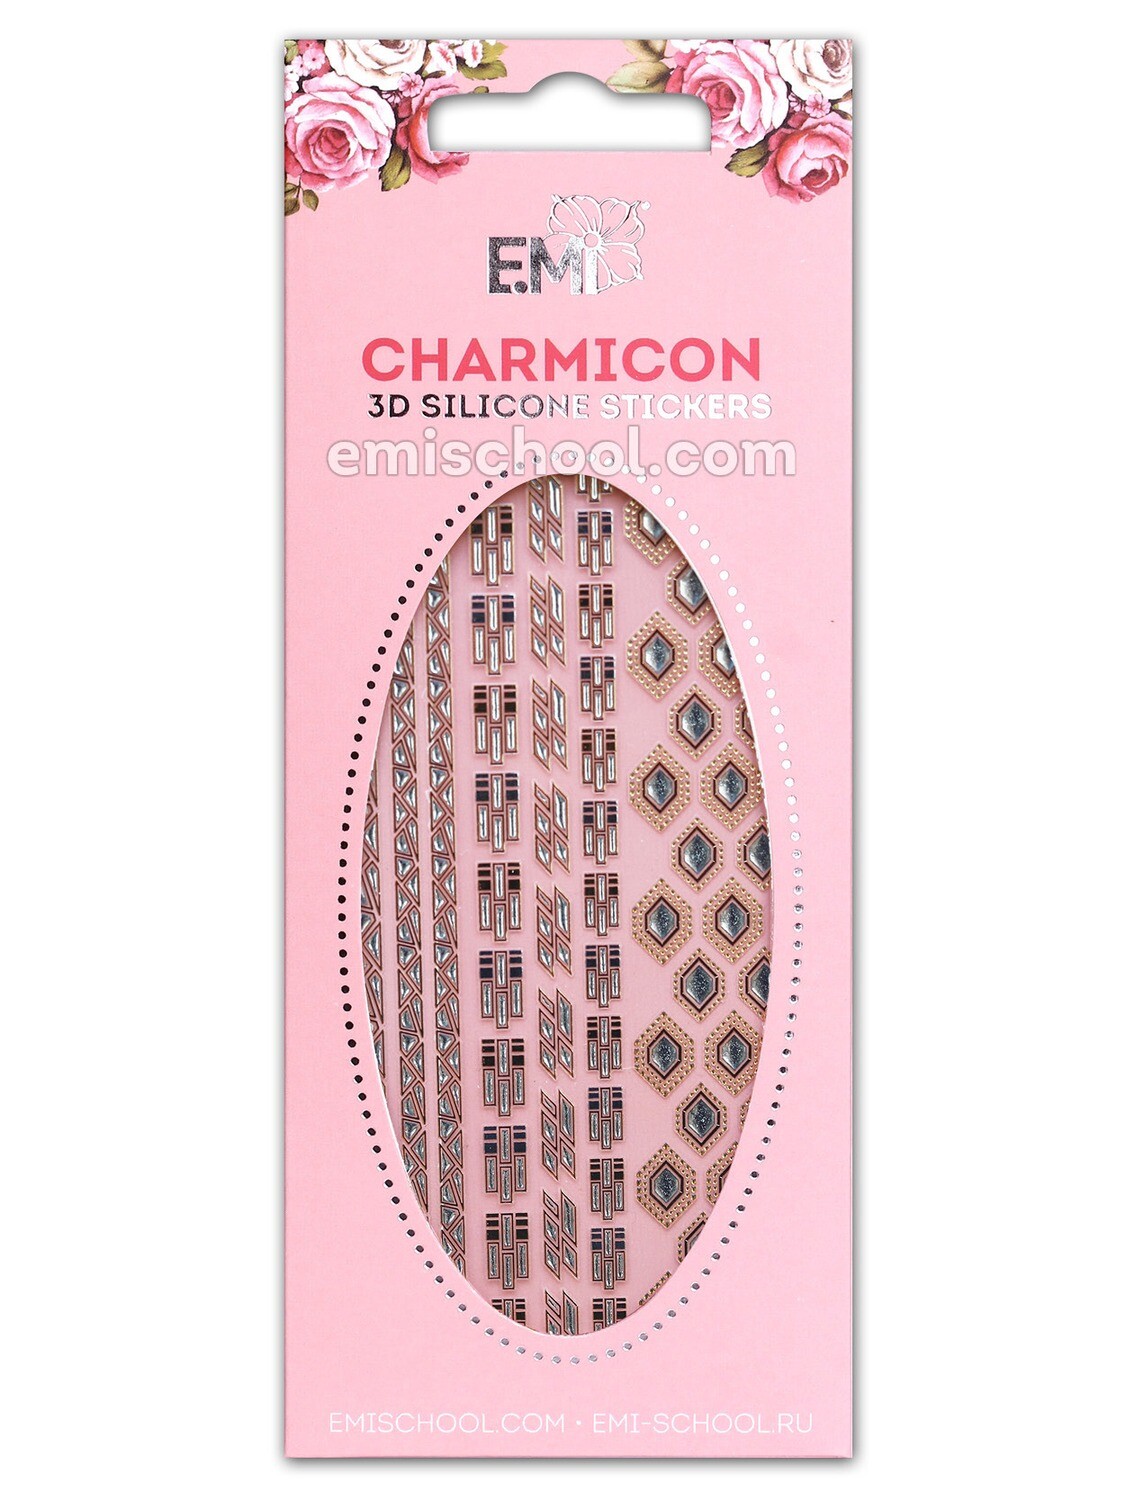 Charmicon 3D Silicone Stickers #77 Chain